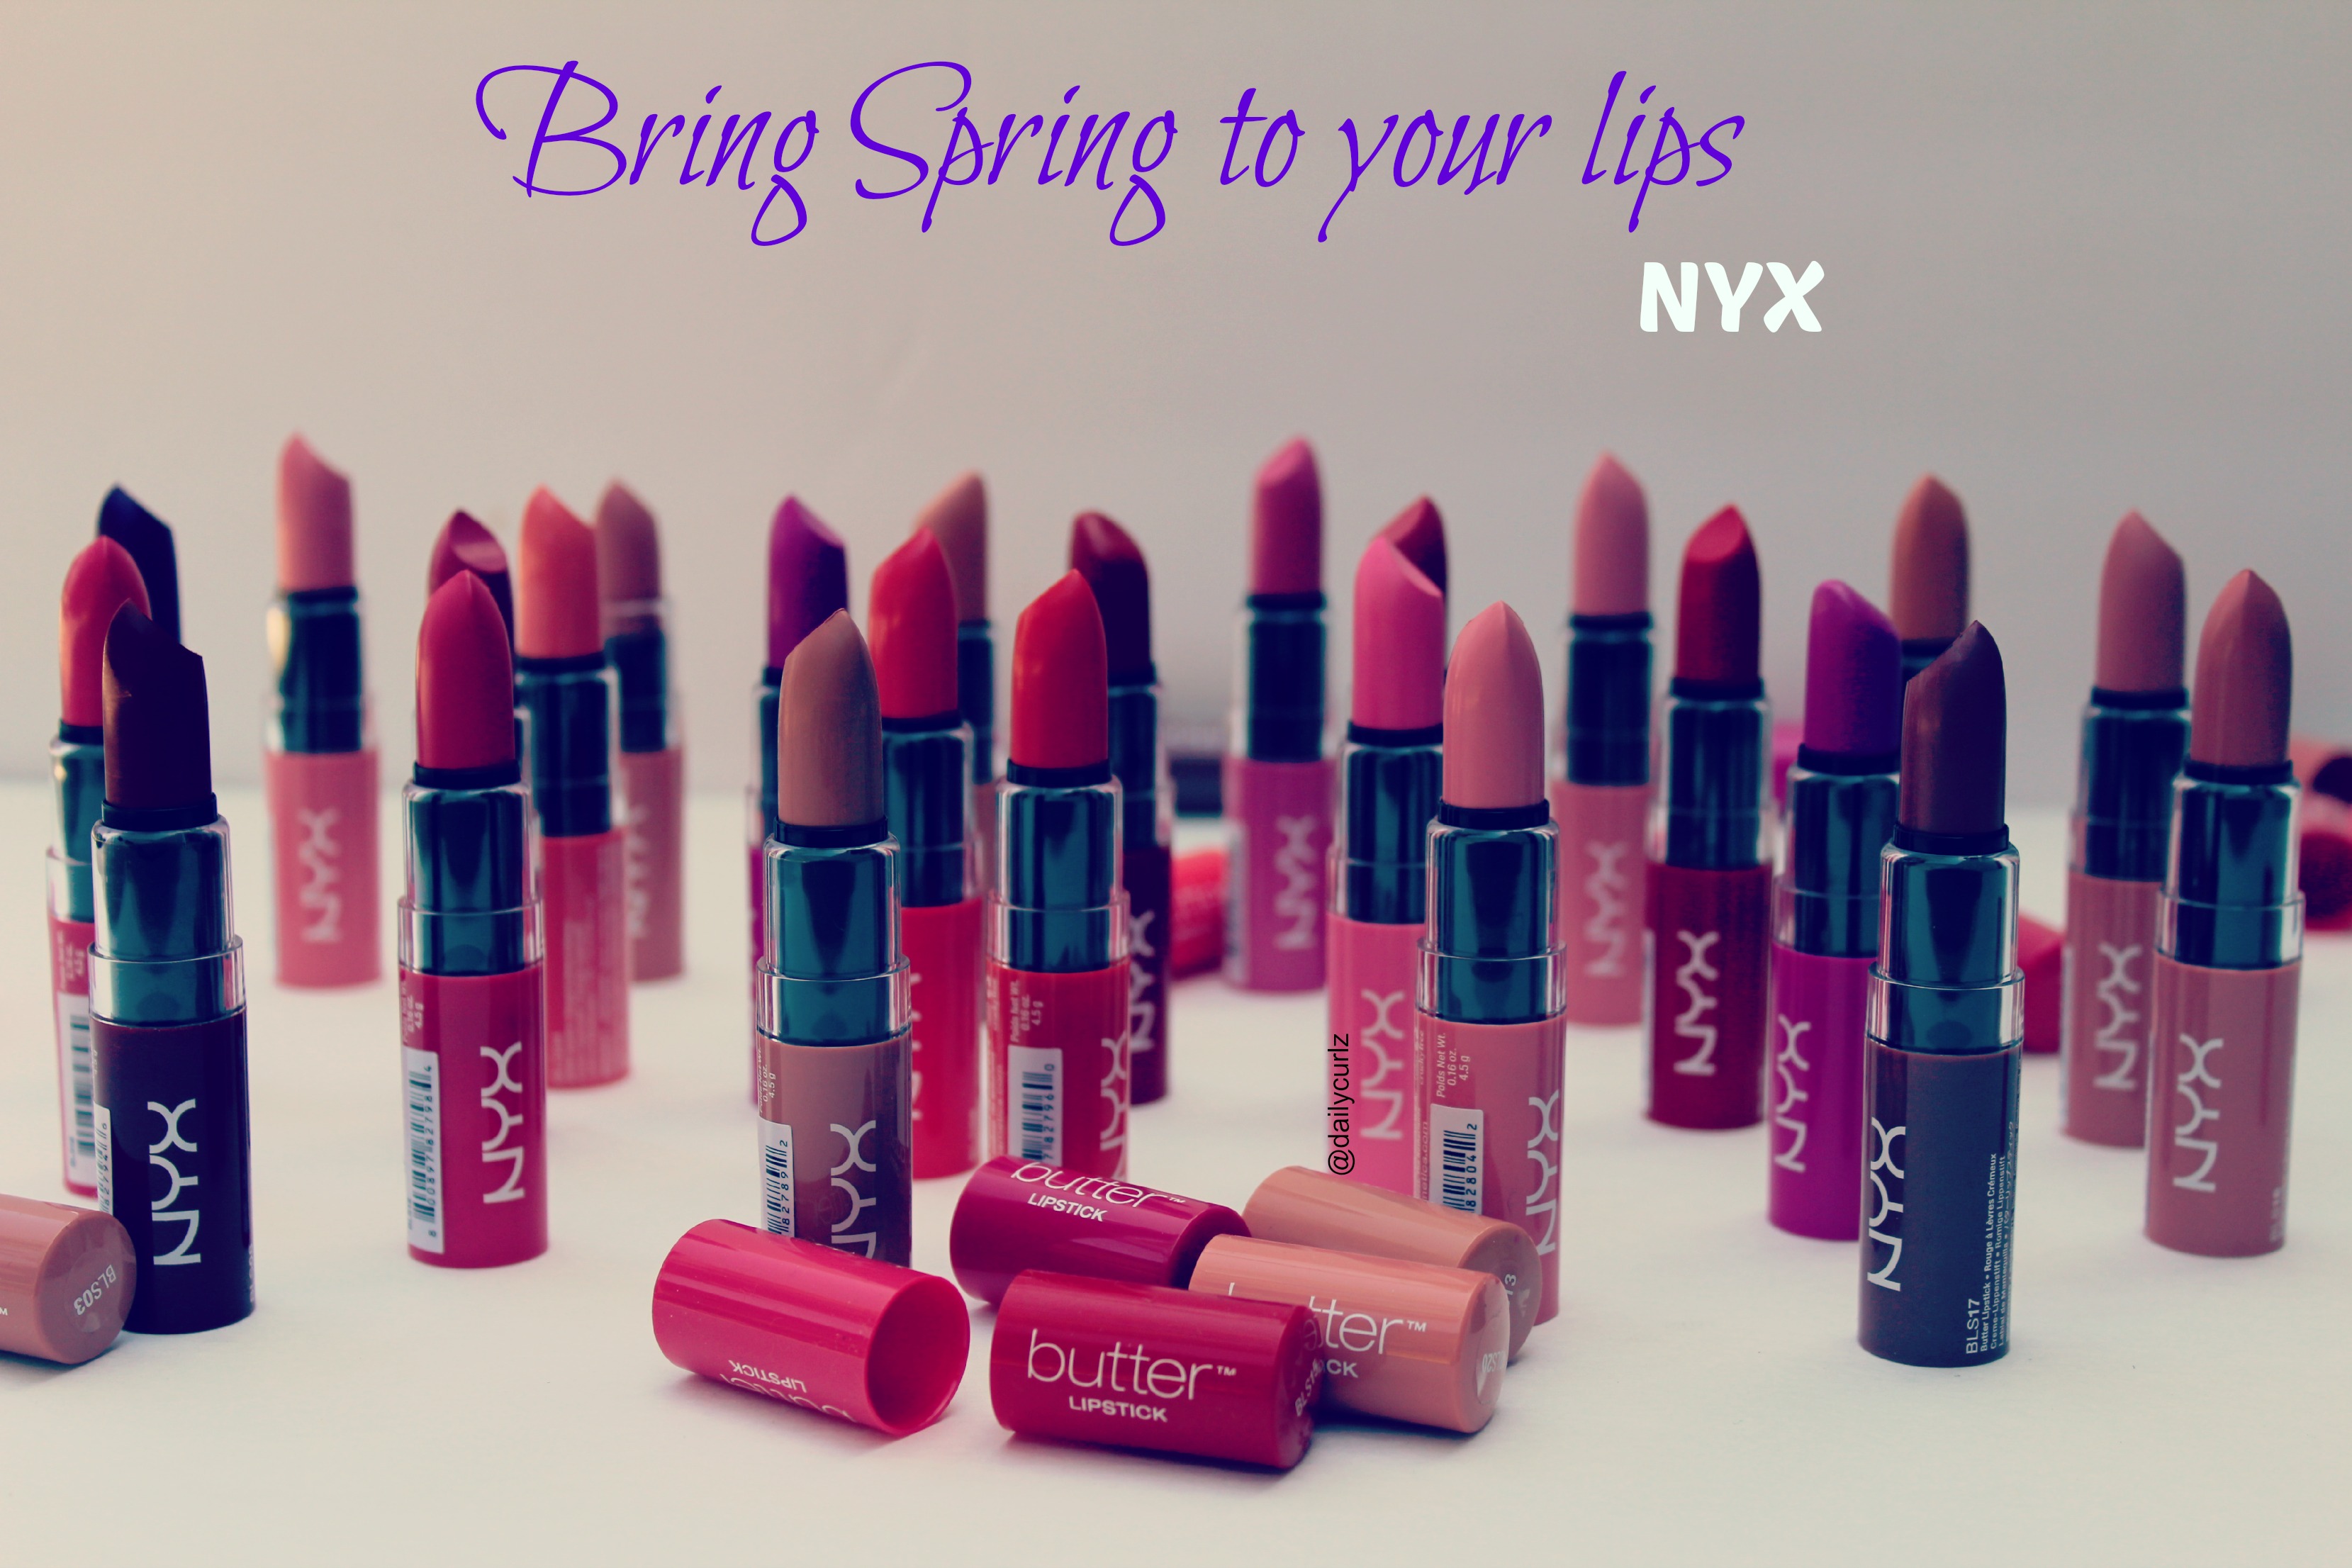 Lips spring ready with NYX / Mis lipstick favoritos para la primavera